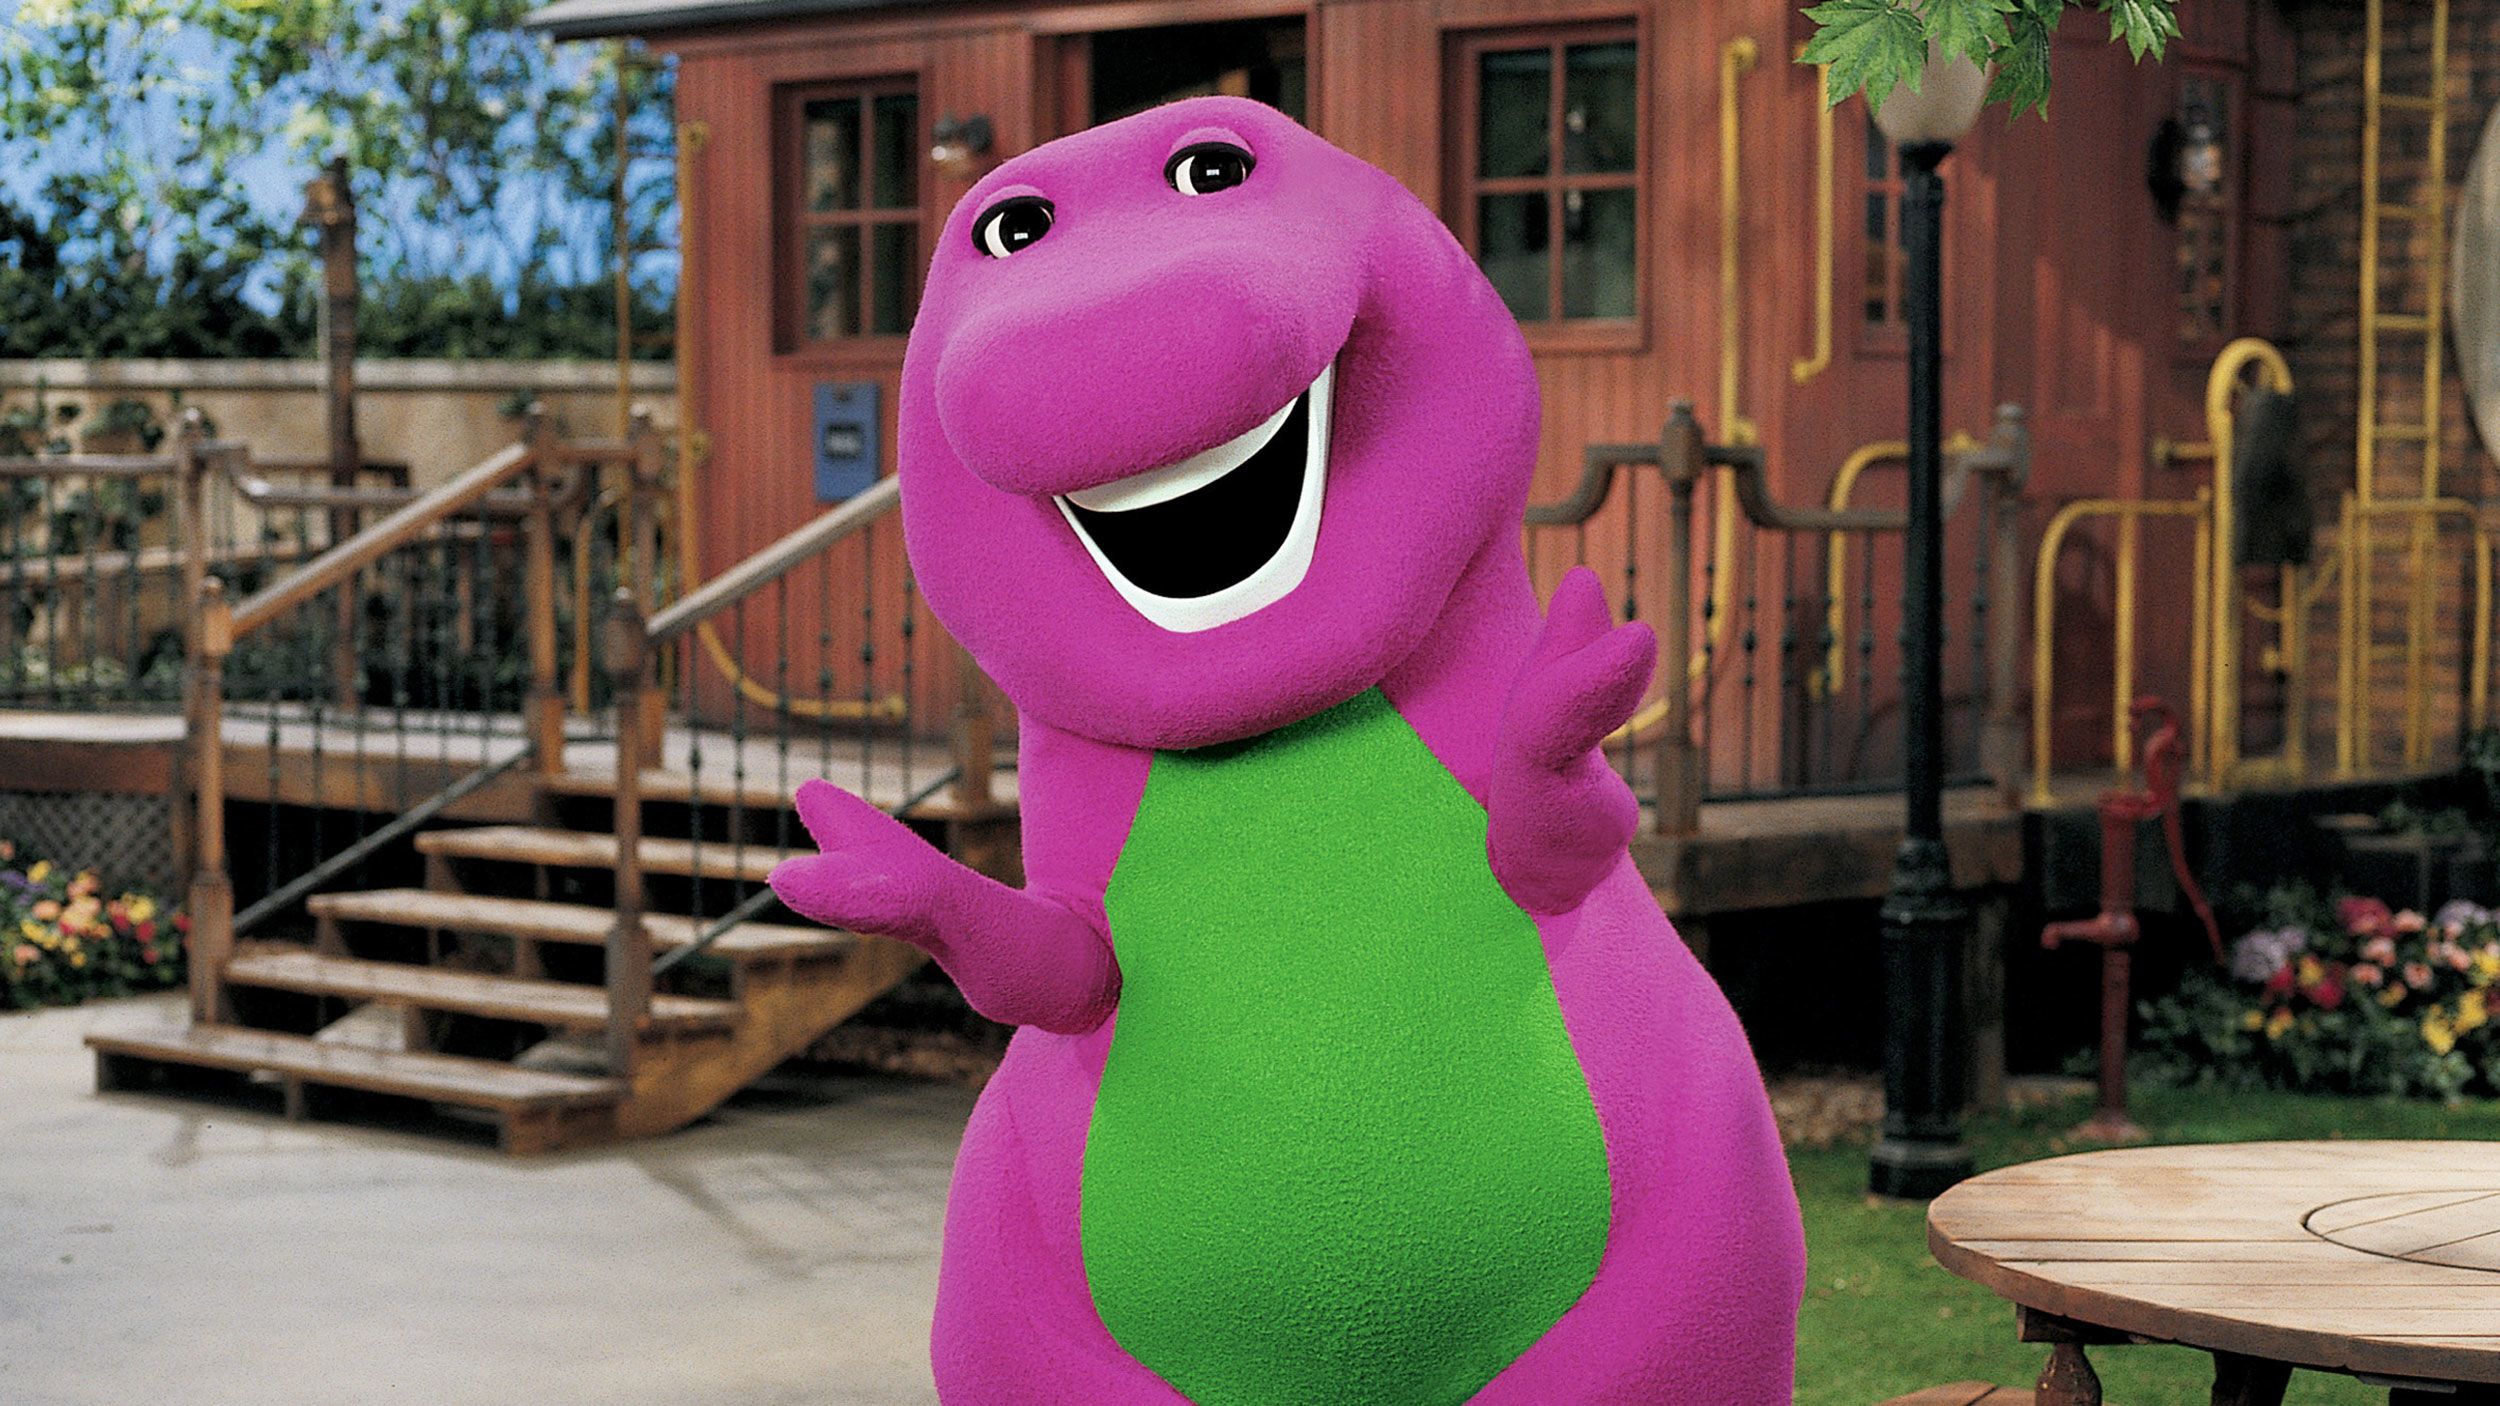 Barney Background